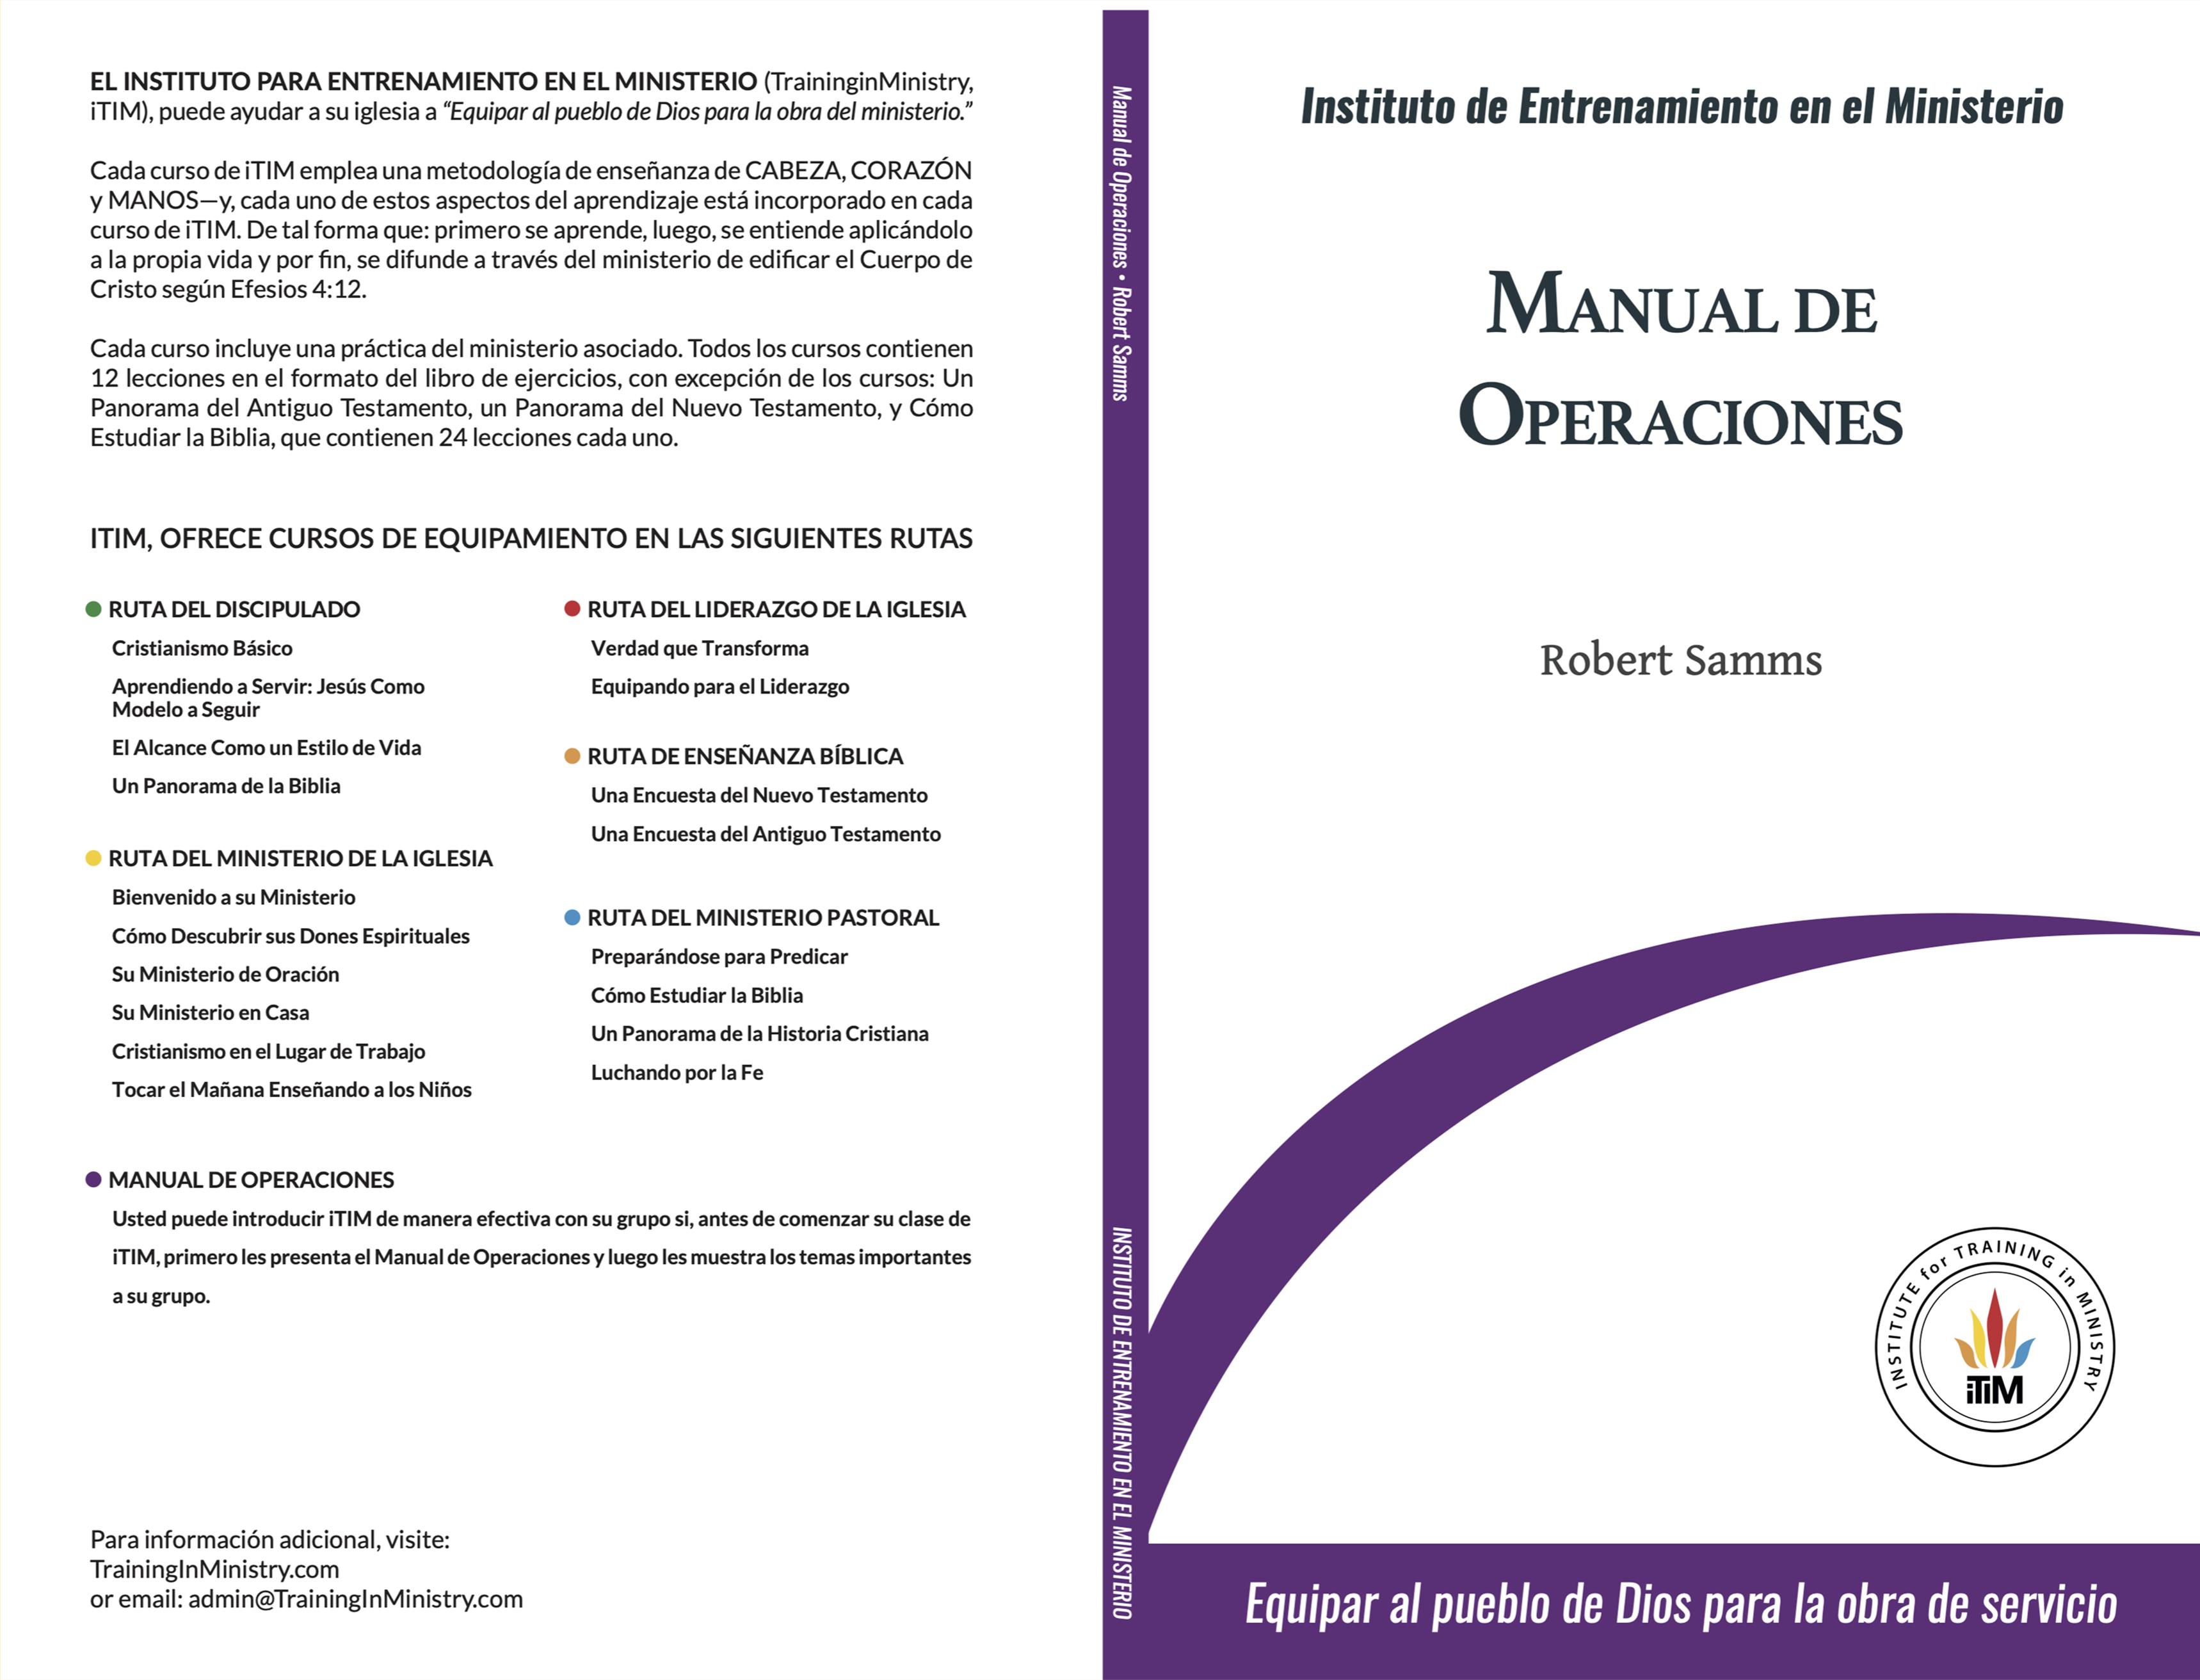 Manual de Operaciones cover image